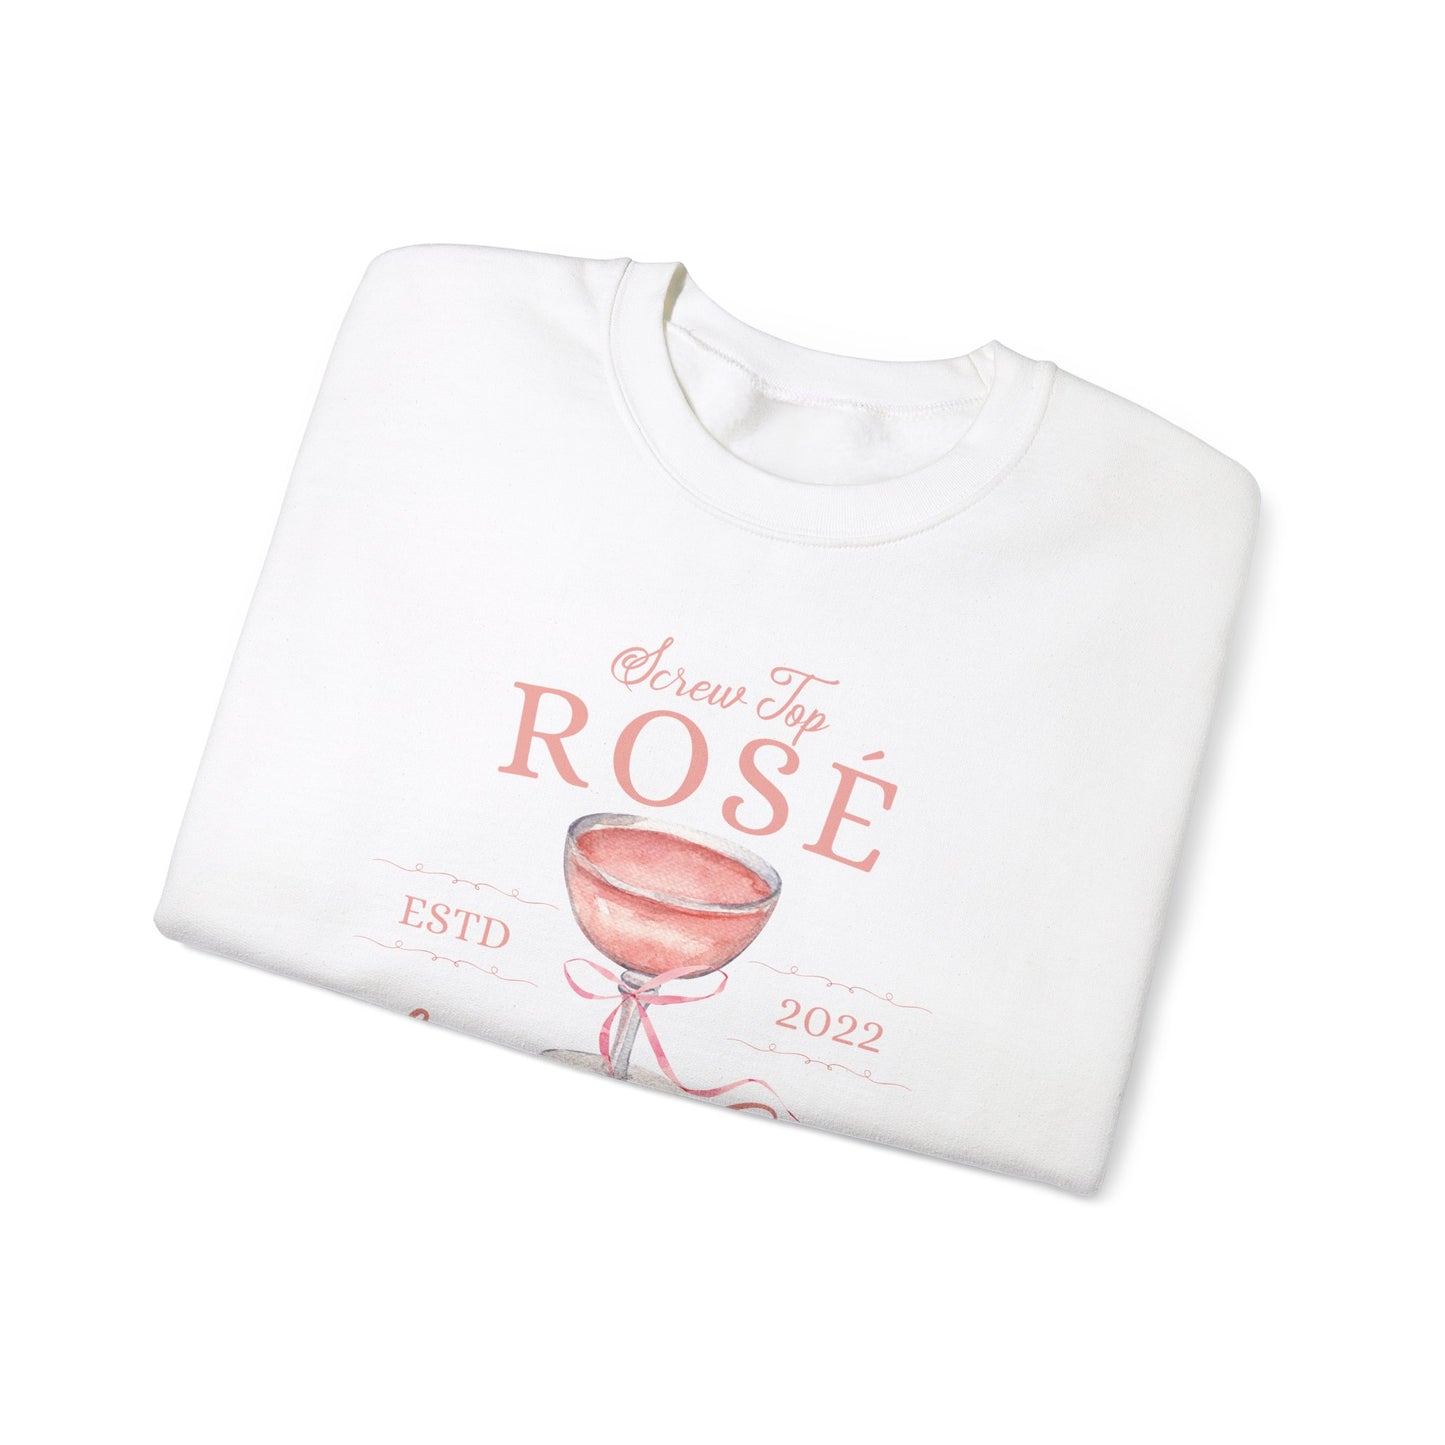 Screw Top Rose' Social Club Sweatshirt